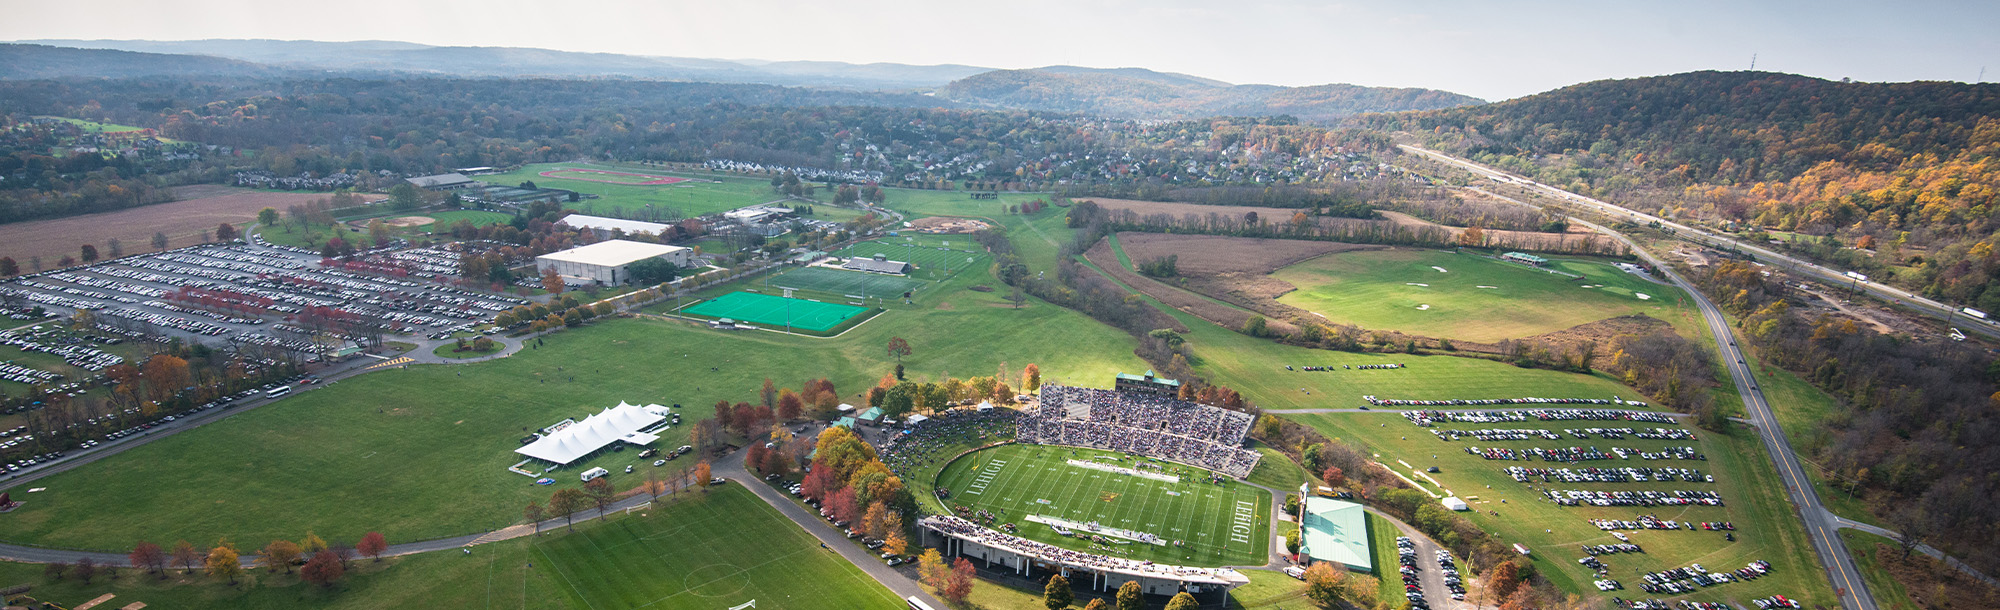 Aerial image of Goodman Campus